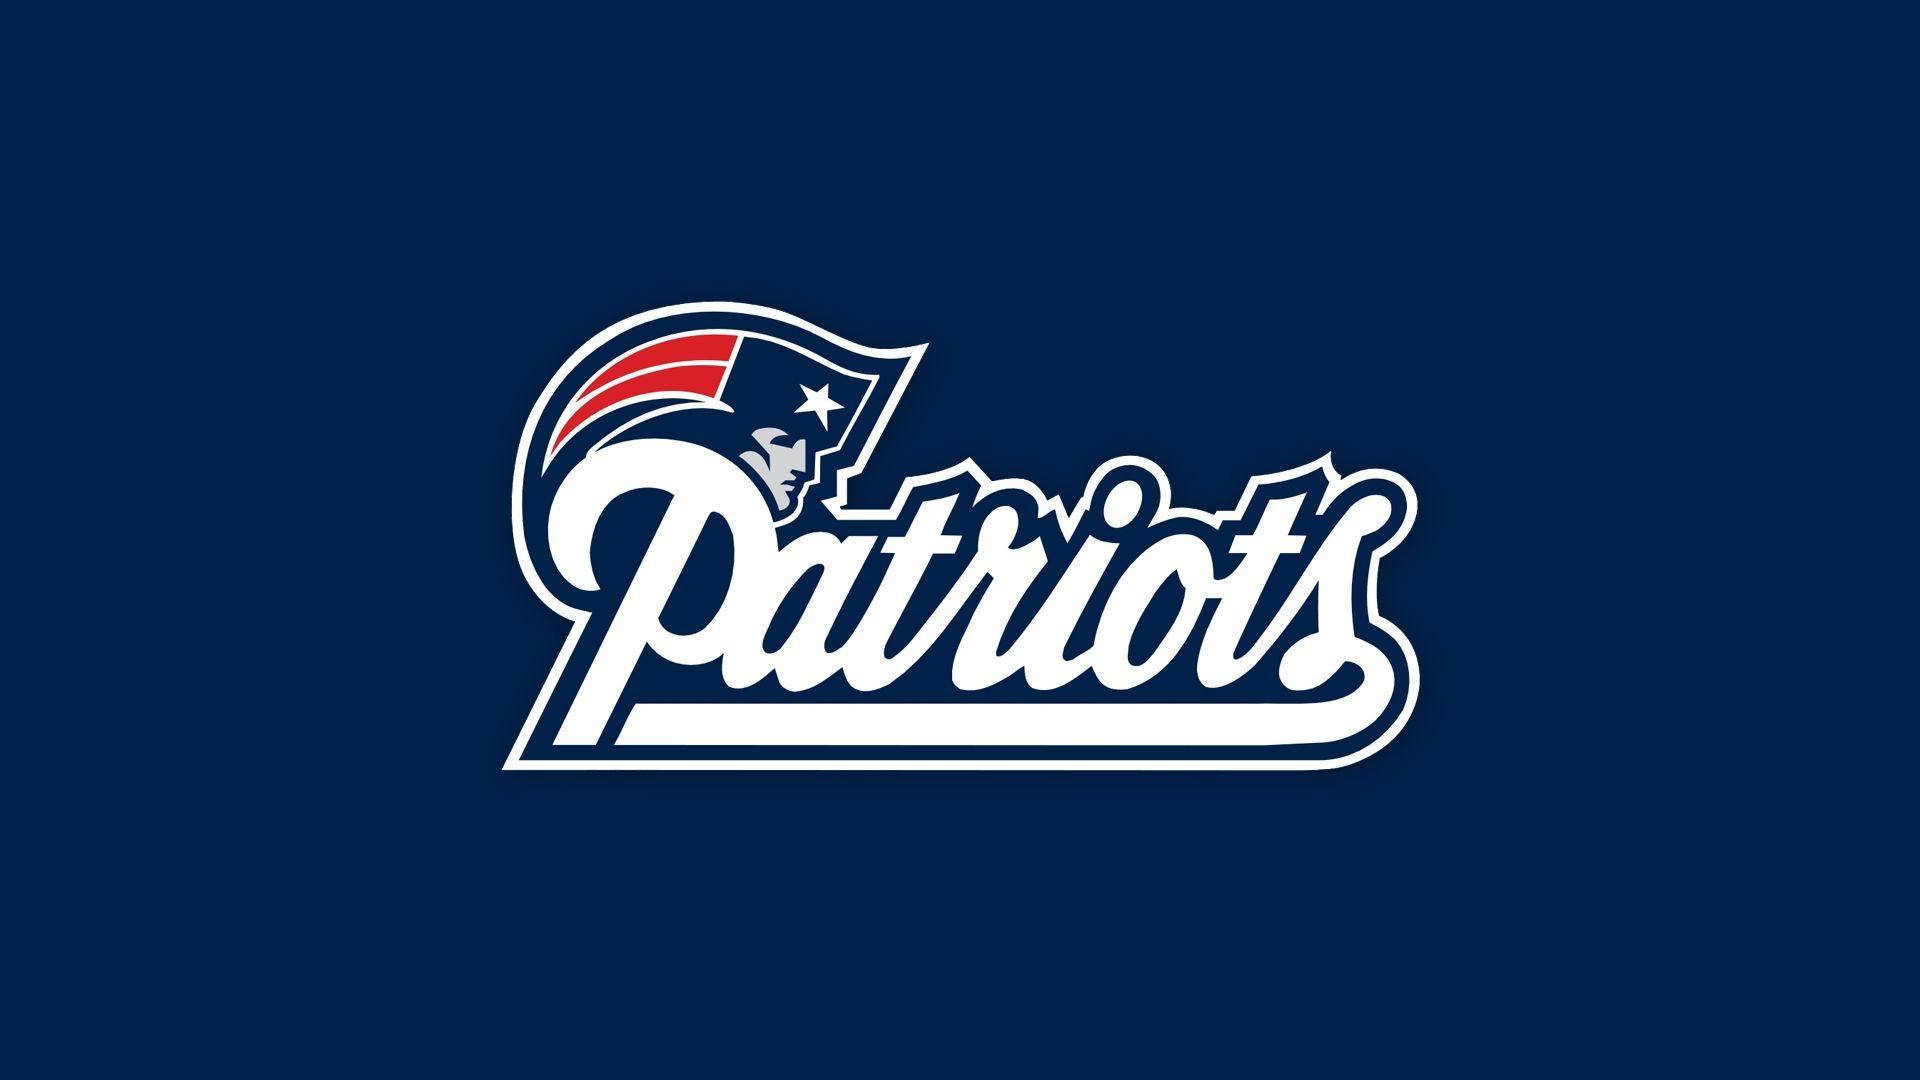 New England Patriots NFL Team Logo Wallpaper